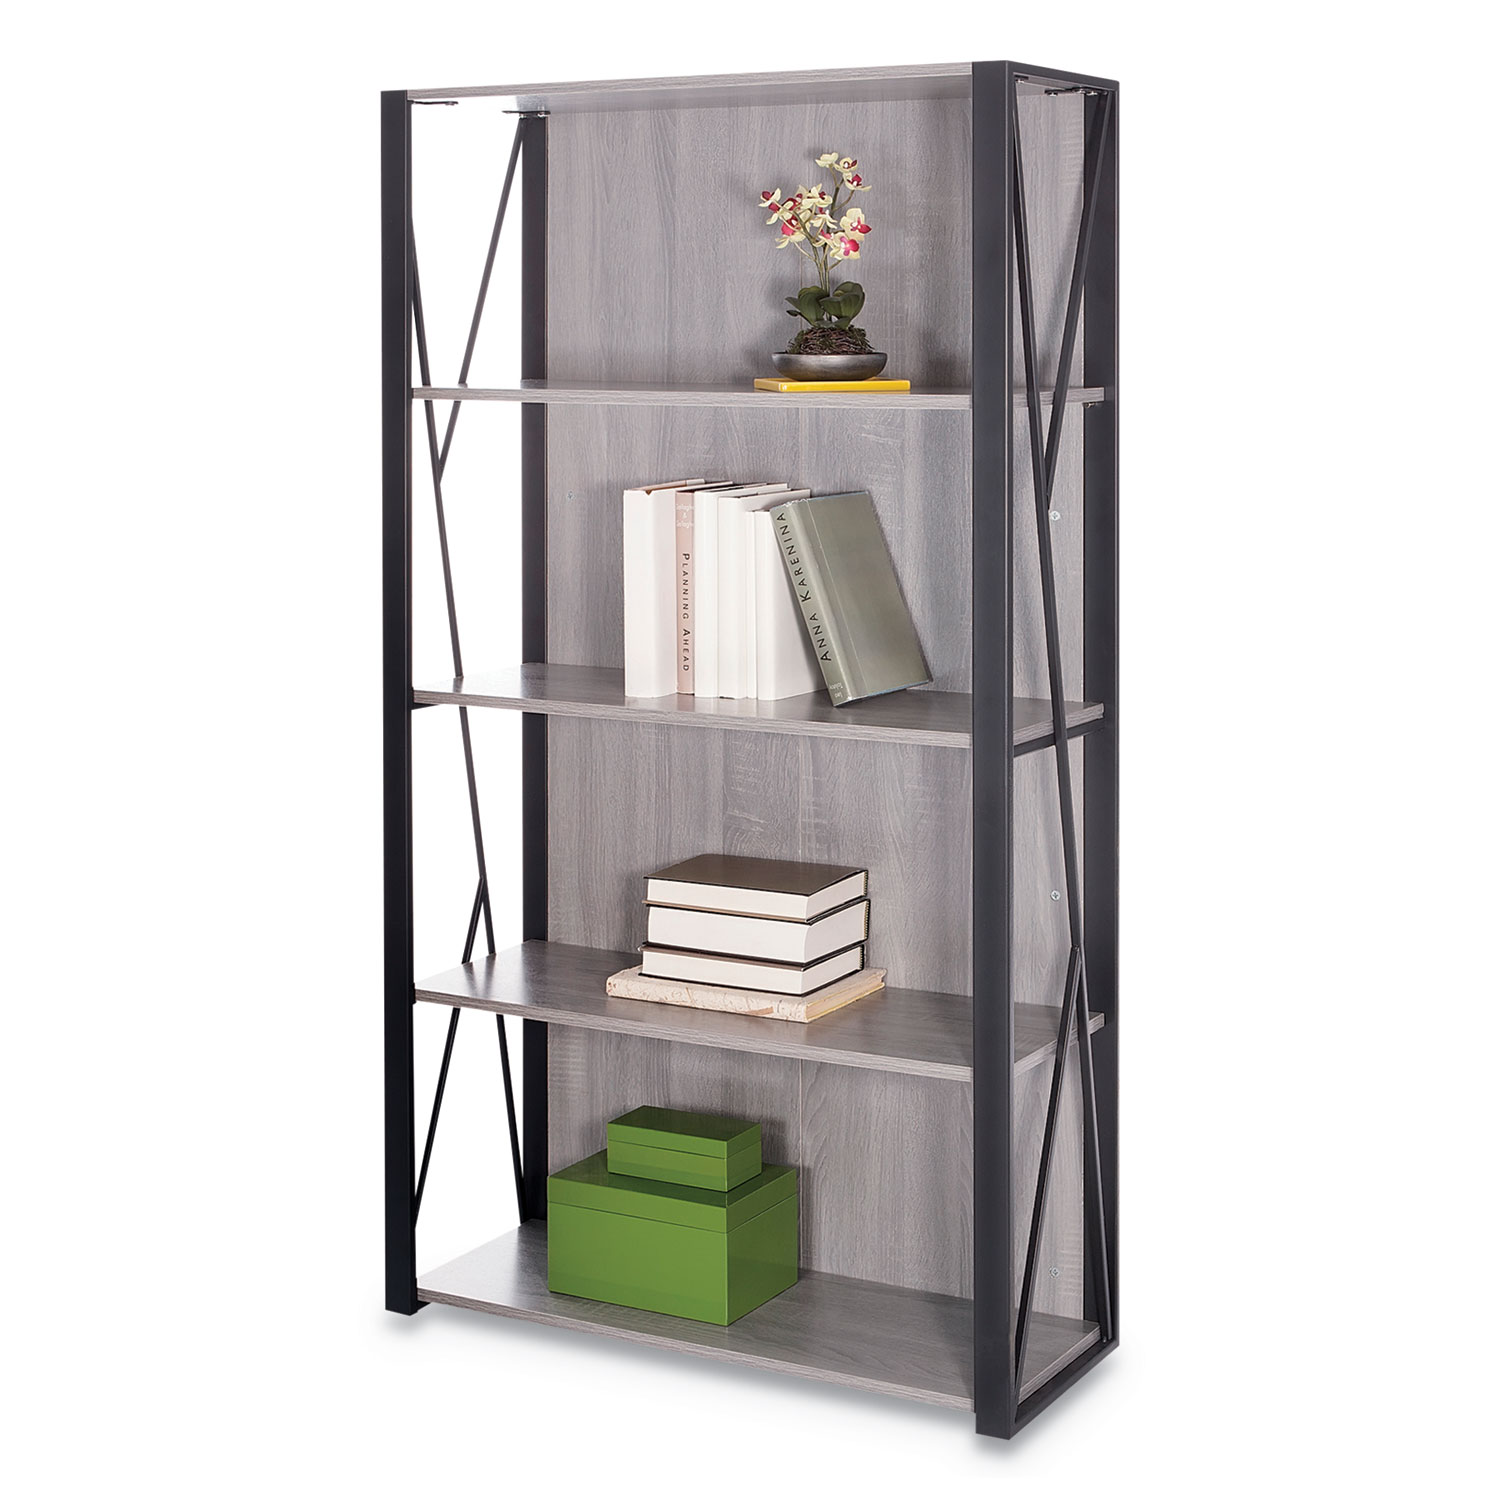  Safco 1903GR Mood Bookcases, 31 3/4w x 12d x 59h, Gray (SAF1903GR) 